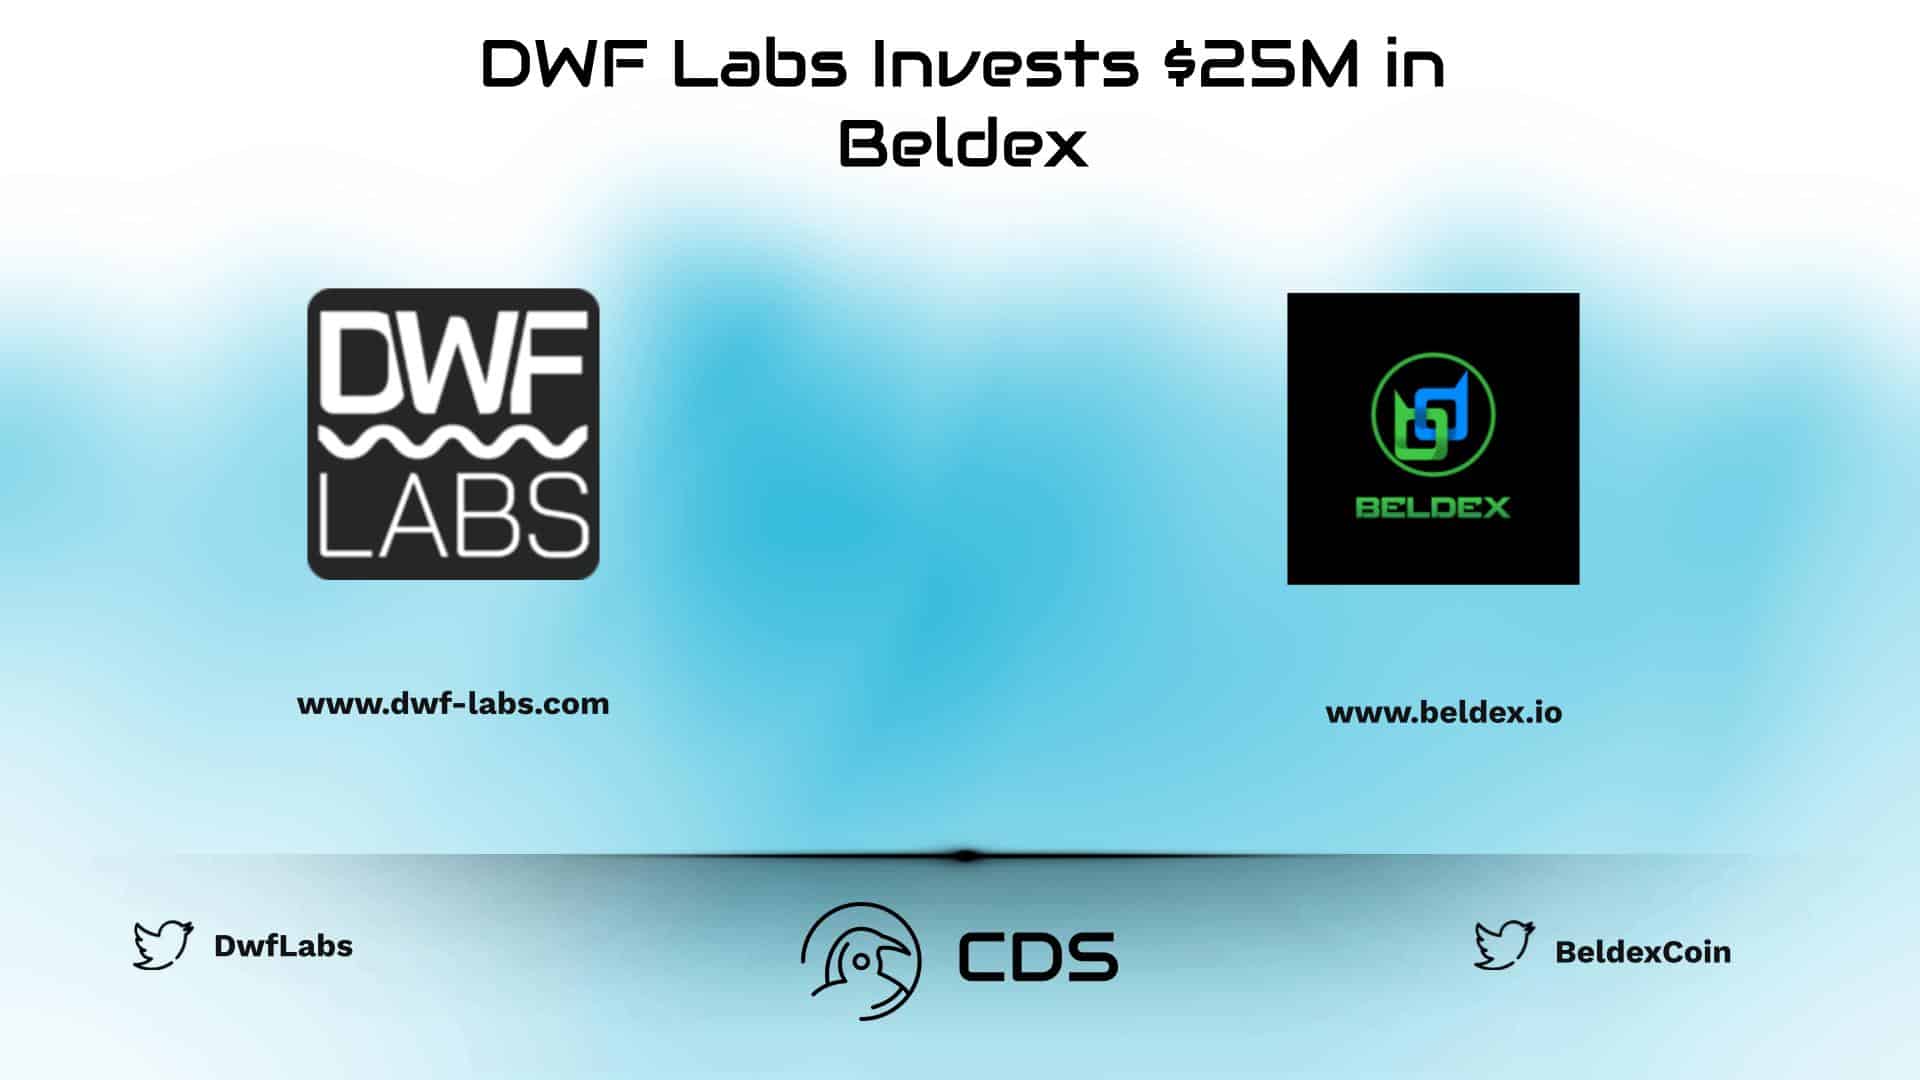 DWF Labs Invests $25M in Beldex